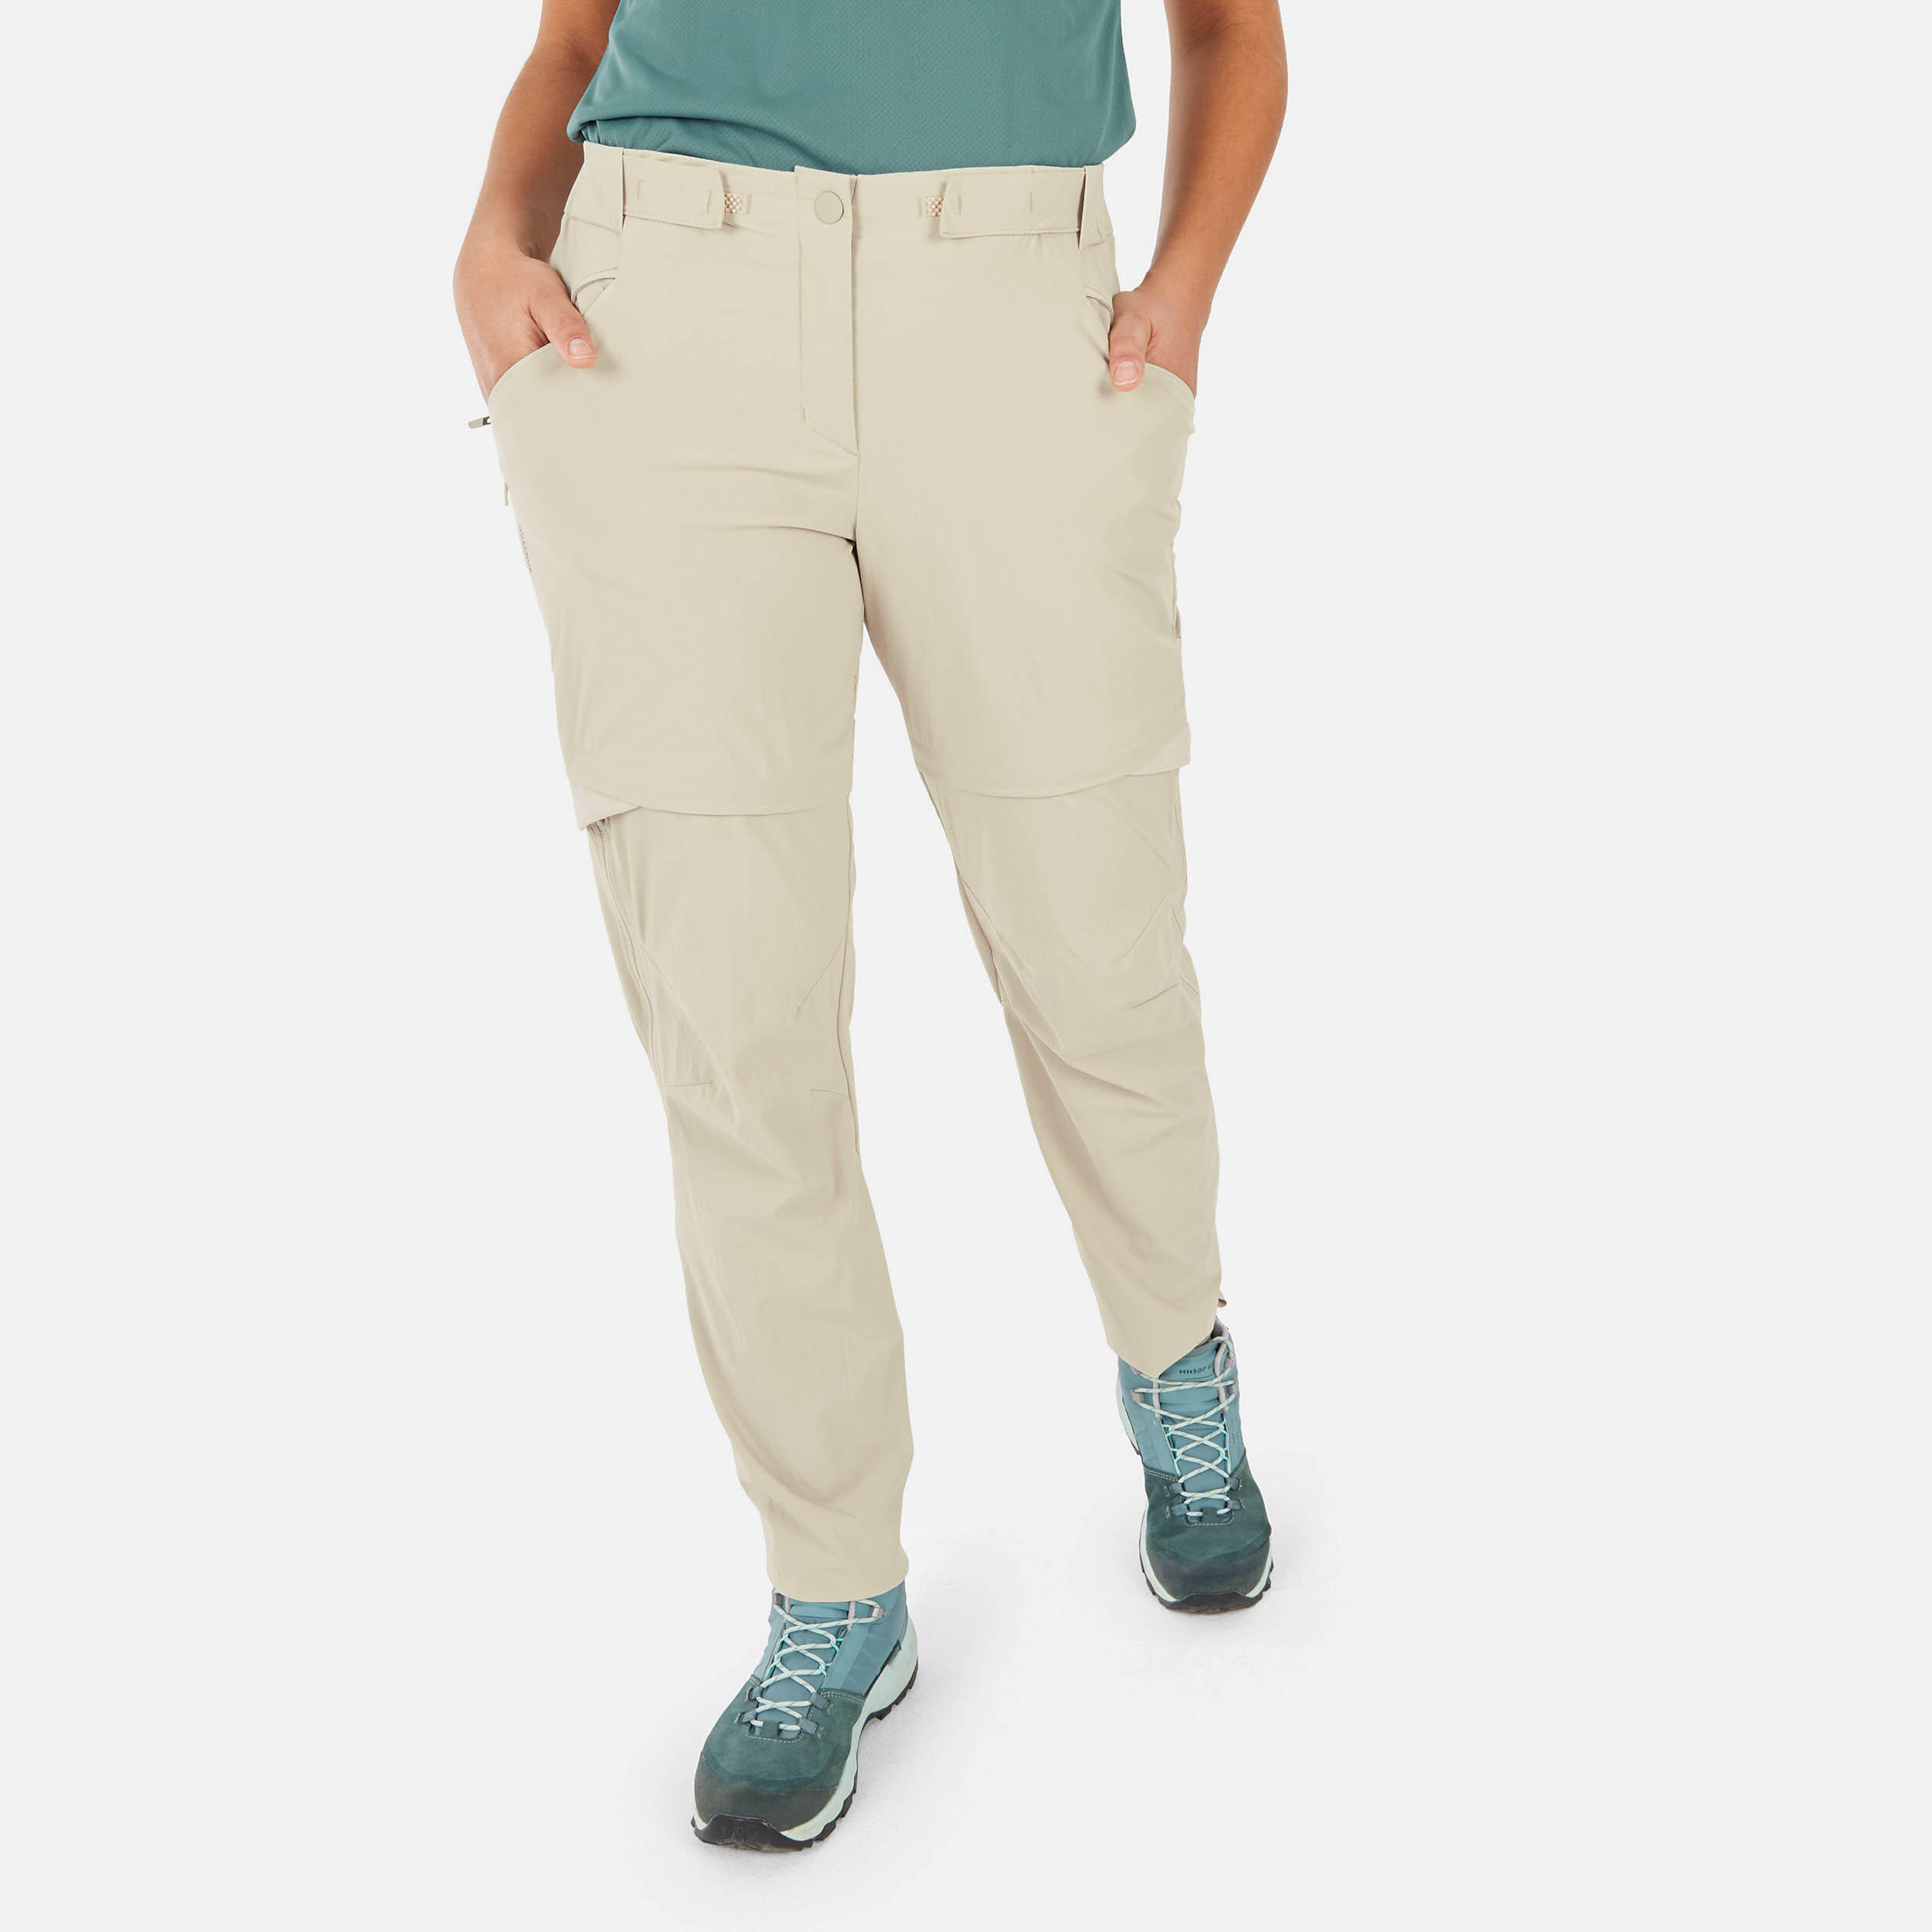 LADIES ROHAN TRAILBLAZERS Hiking/Walking Trousers - Size 8R - Dark Grey  £9.50 - PicClick UK